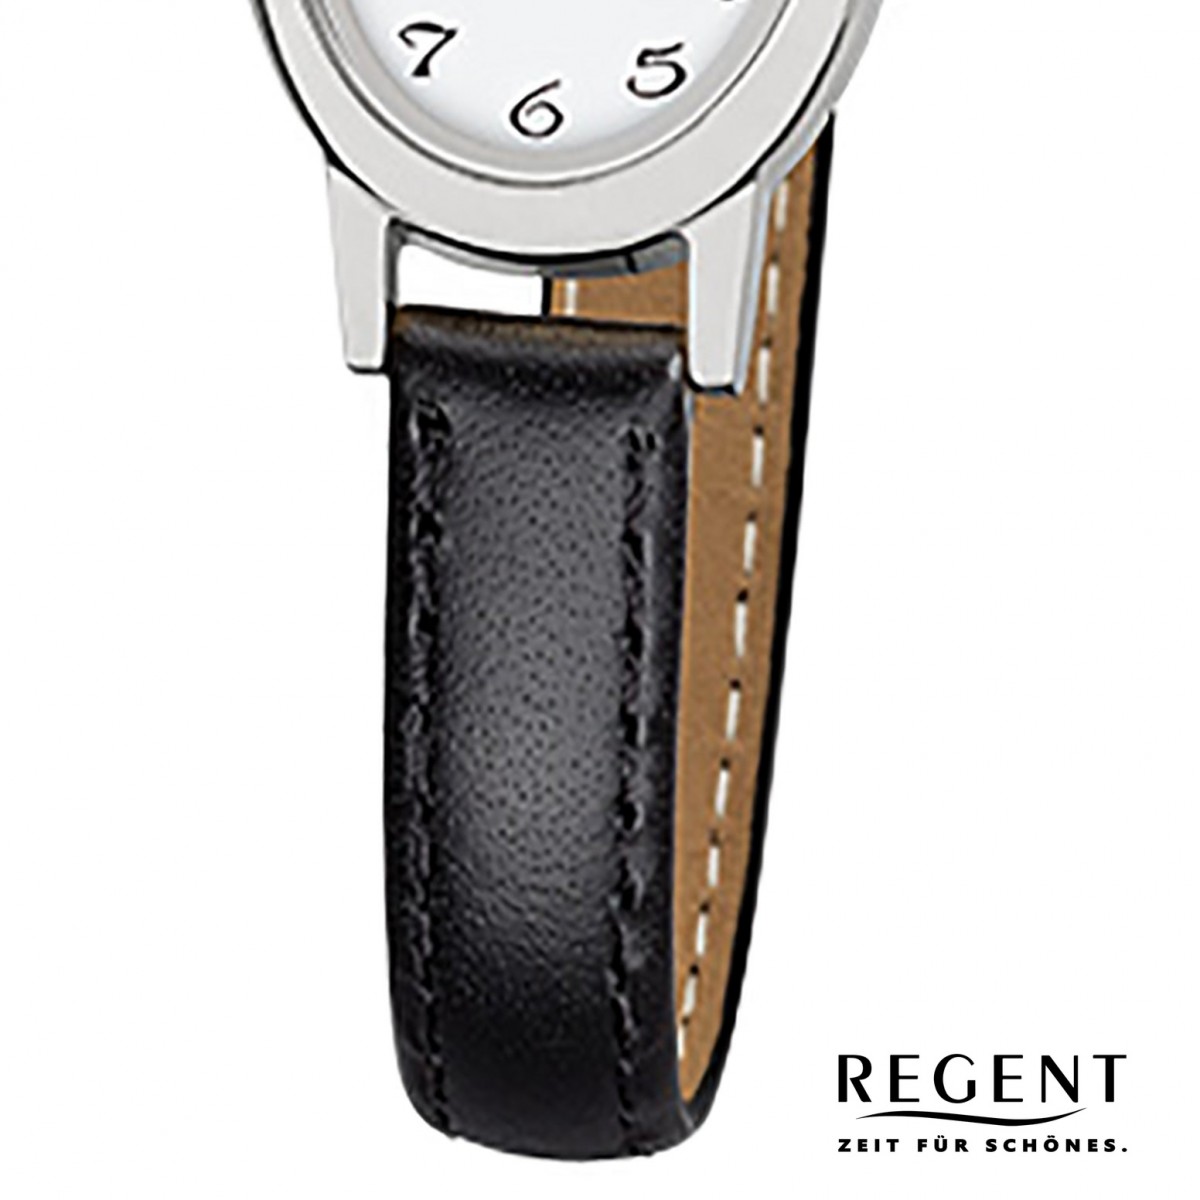 Regent Damen-Armbanduhr F-976 Quarz-Uhr Mini Leder-Armband schwarz URF976